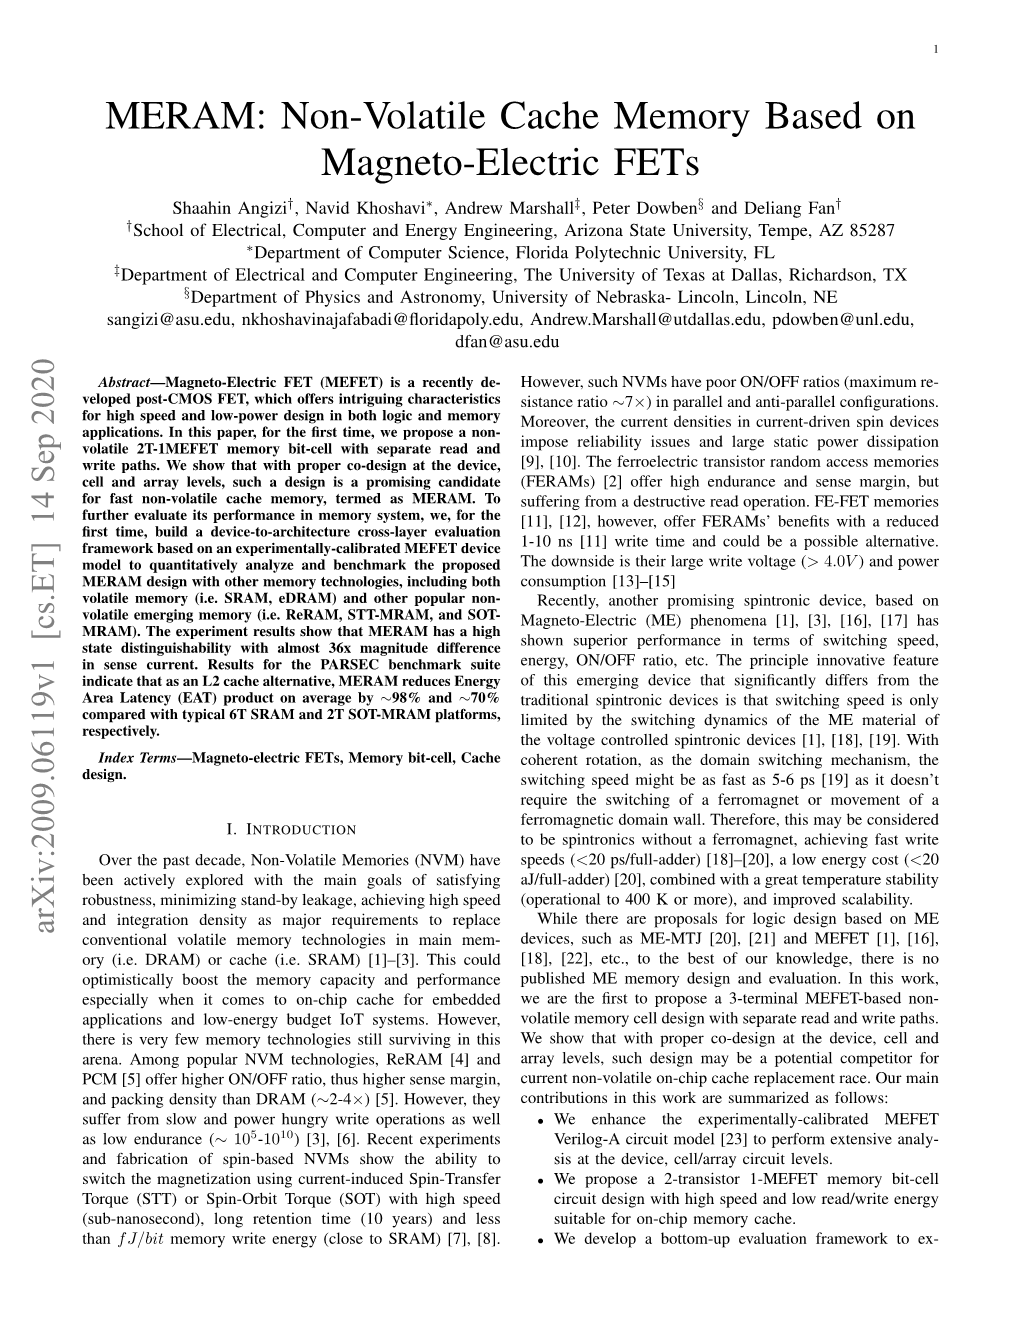 MERAM: Non-Volatile Cache Memory Based on Magneto-Electric Fets